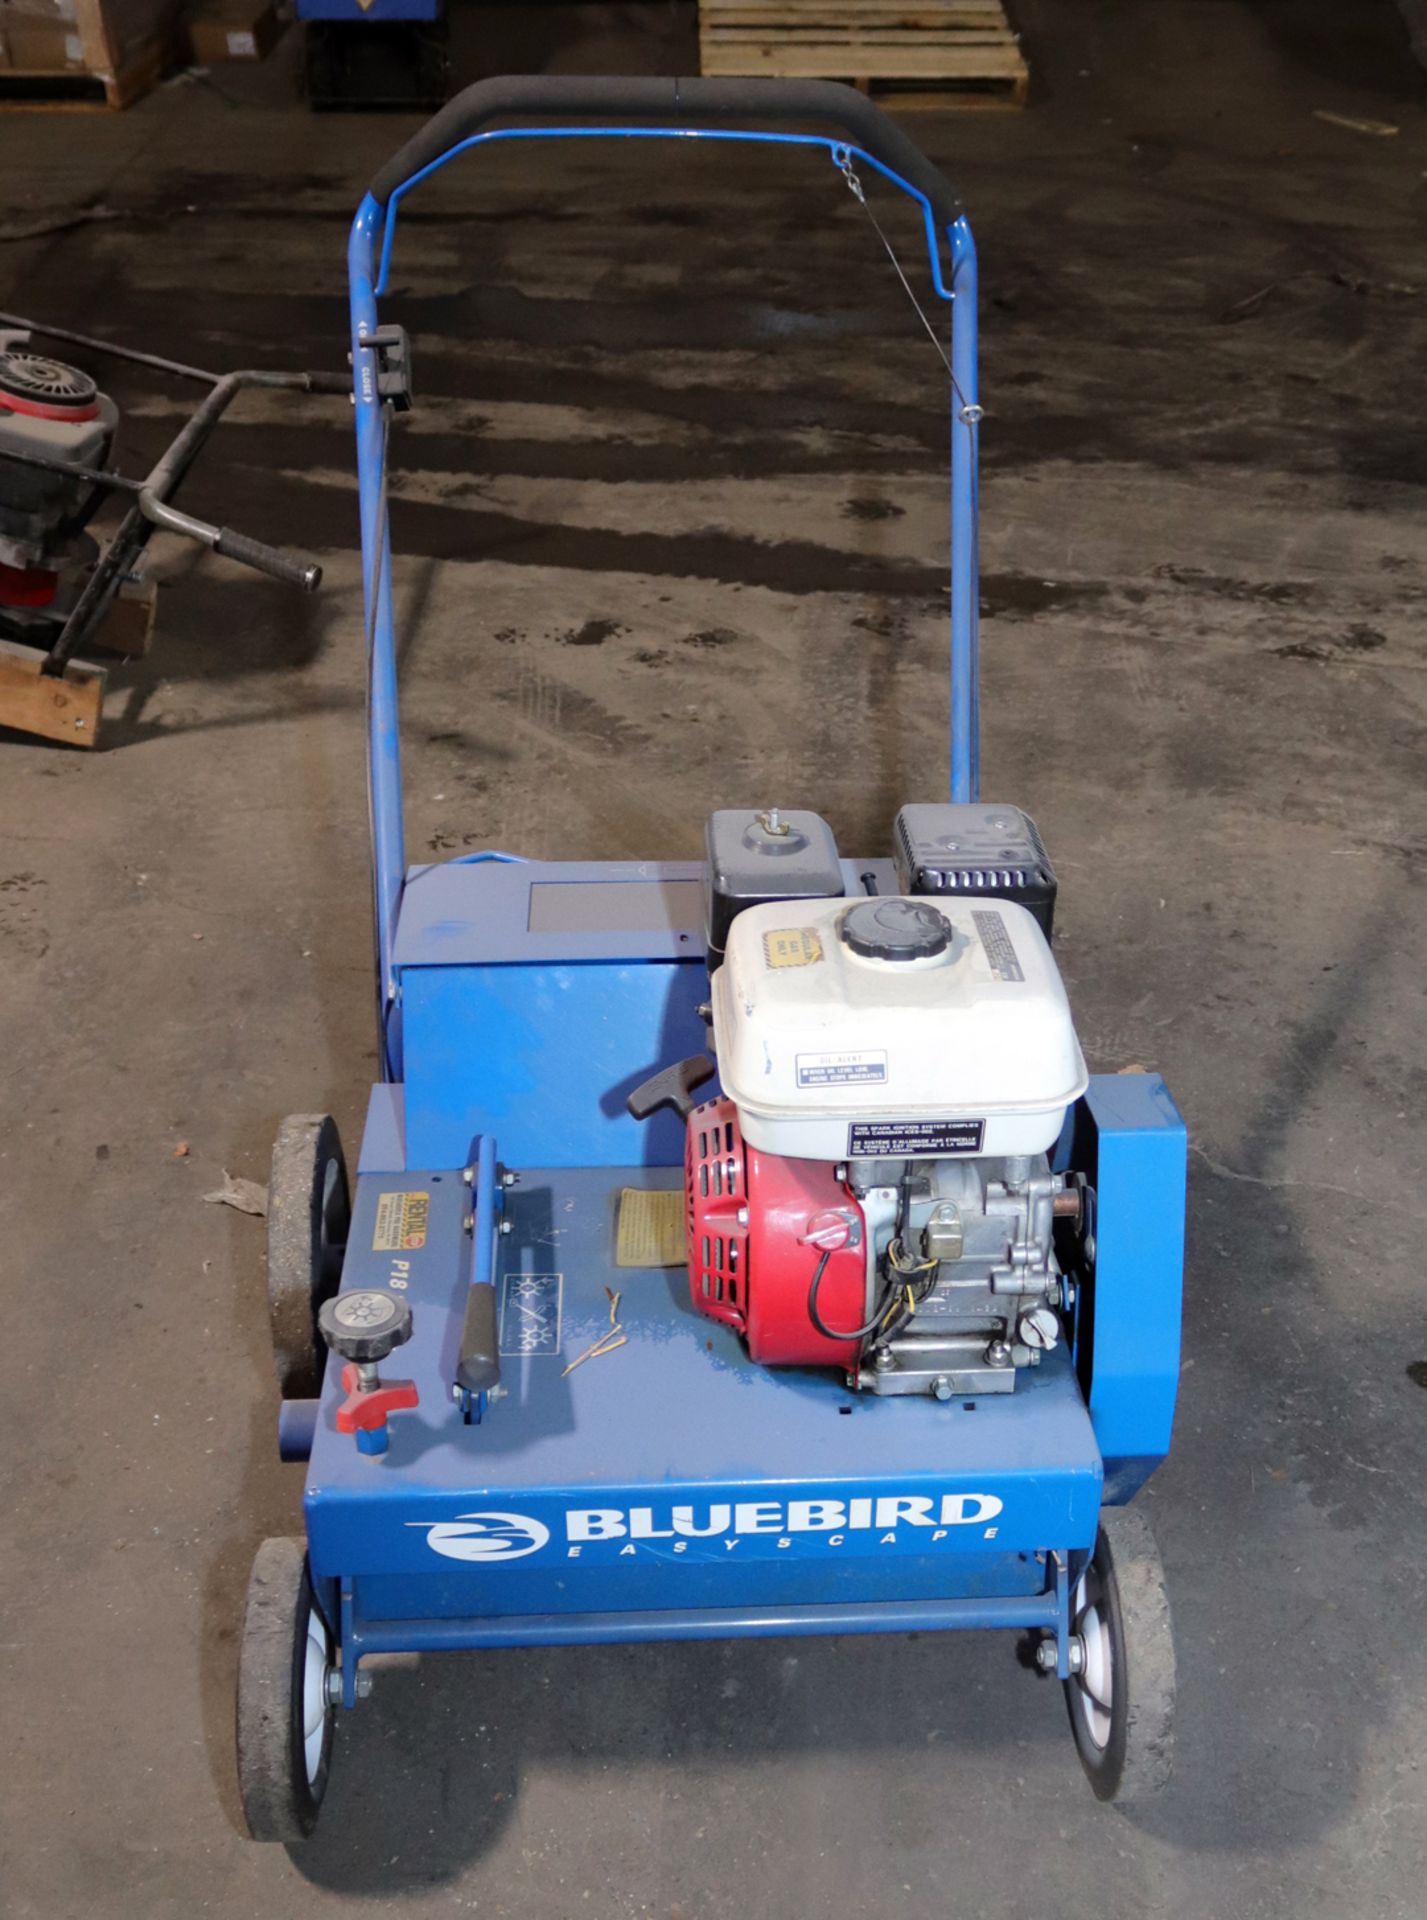 BLUEBIRD SEEDER MODEL P18 W/ HONDA GAS ENGINE, SMALL AMOUNT OF USE